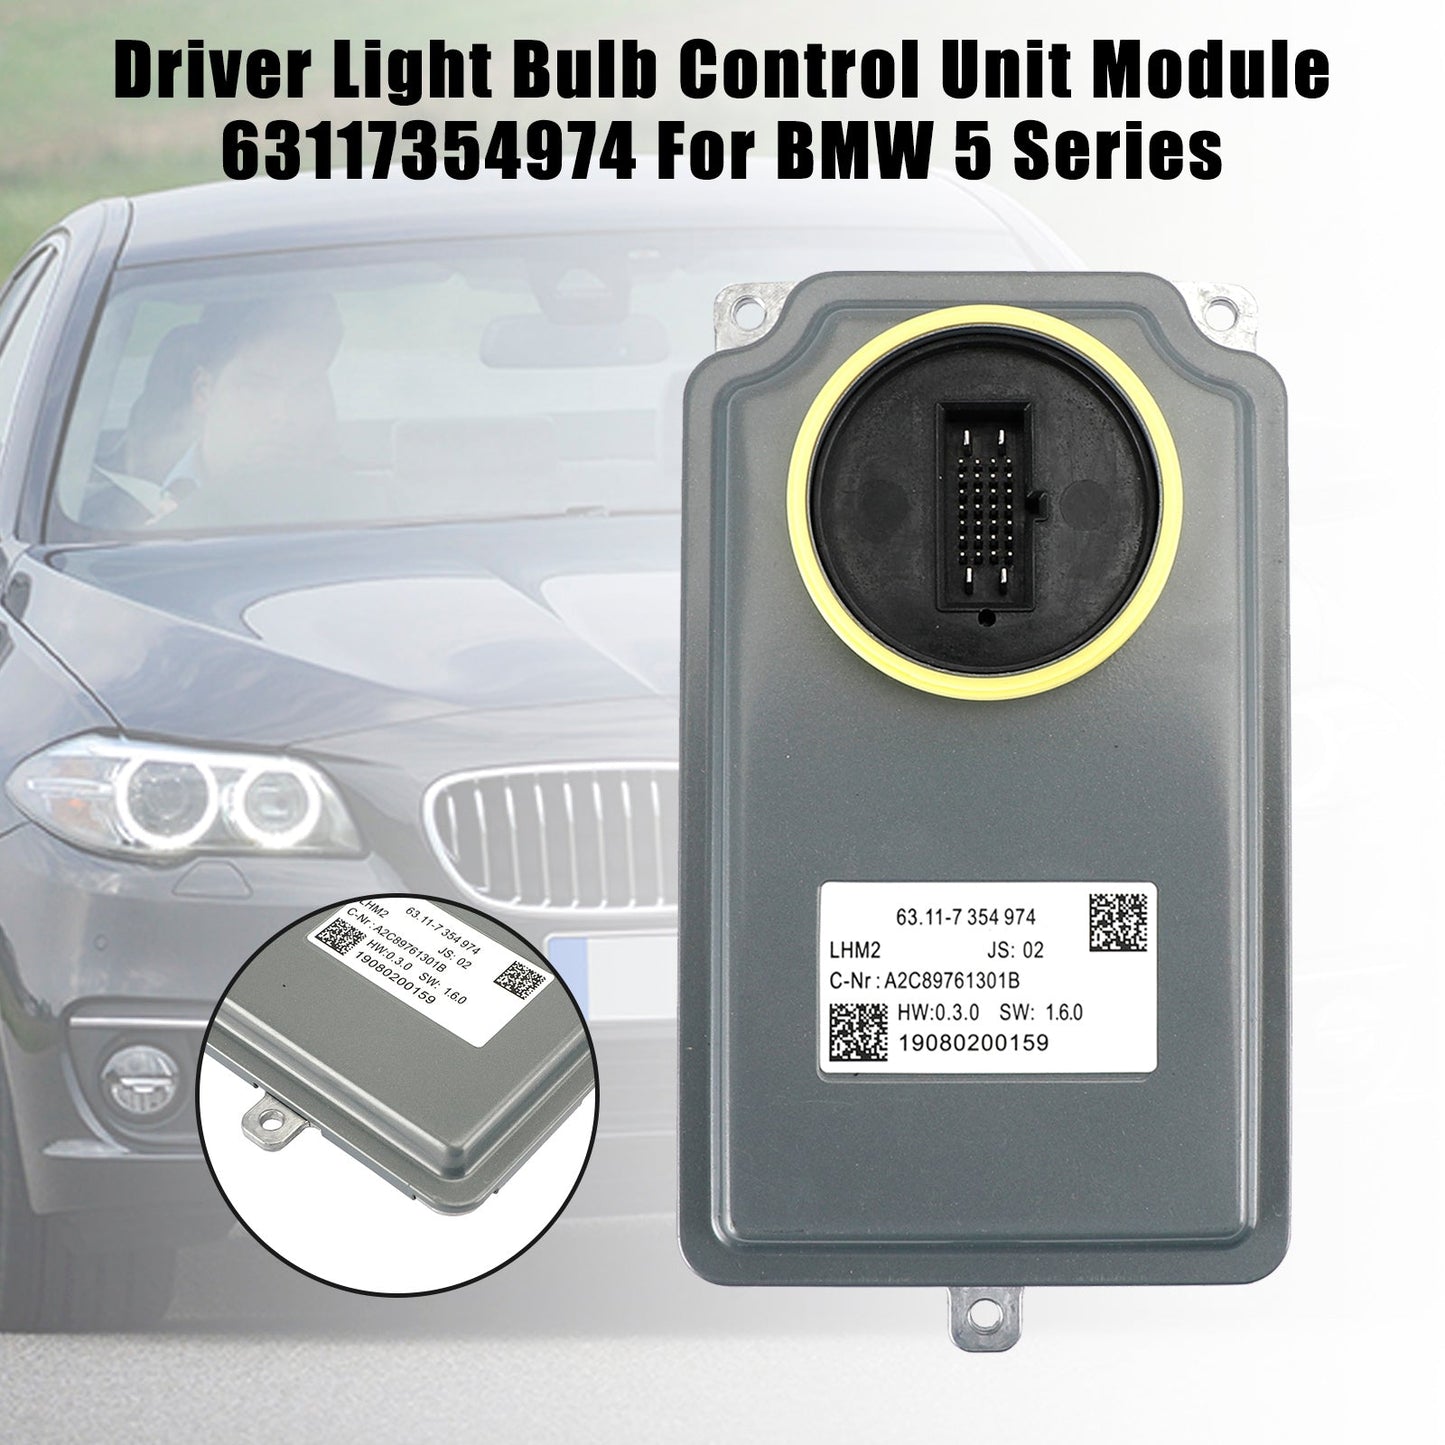 2014-2016 BMW 535d 535dx 550i 550ix Driver Light Bulb Control Unit Module 63117354974